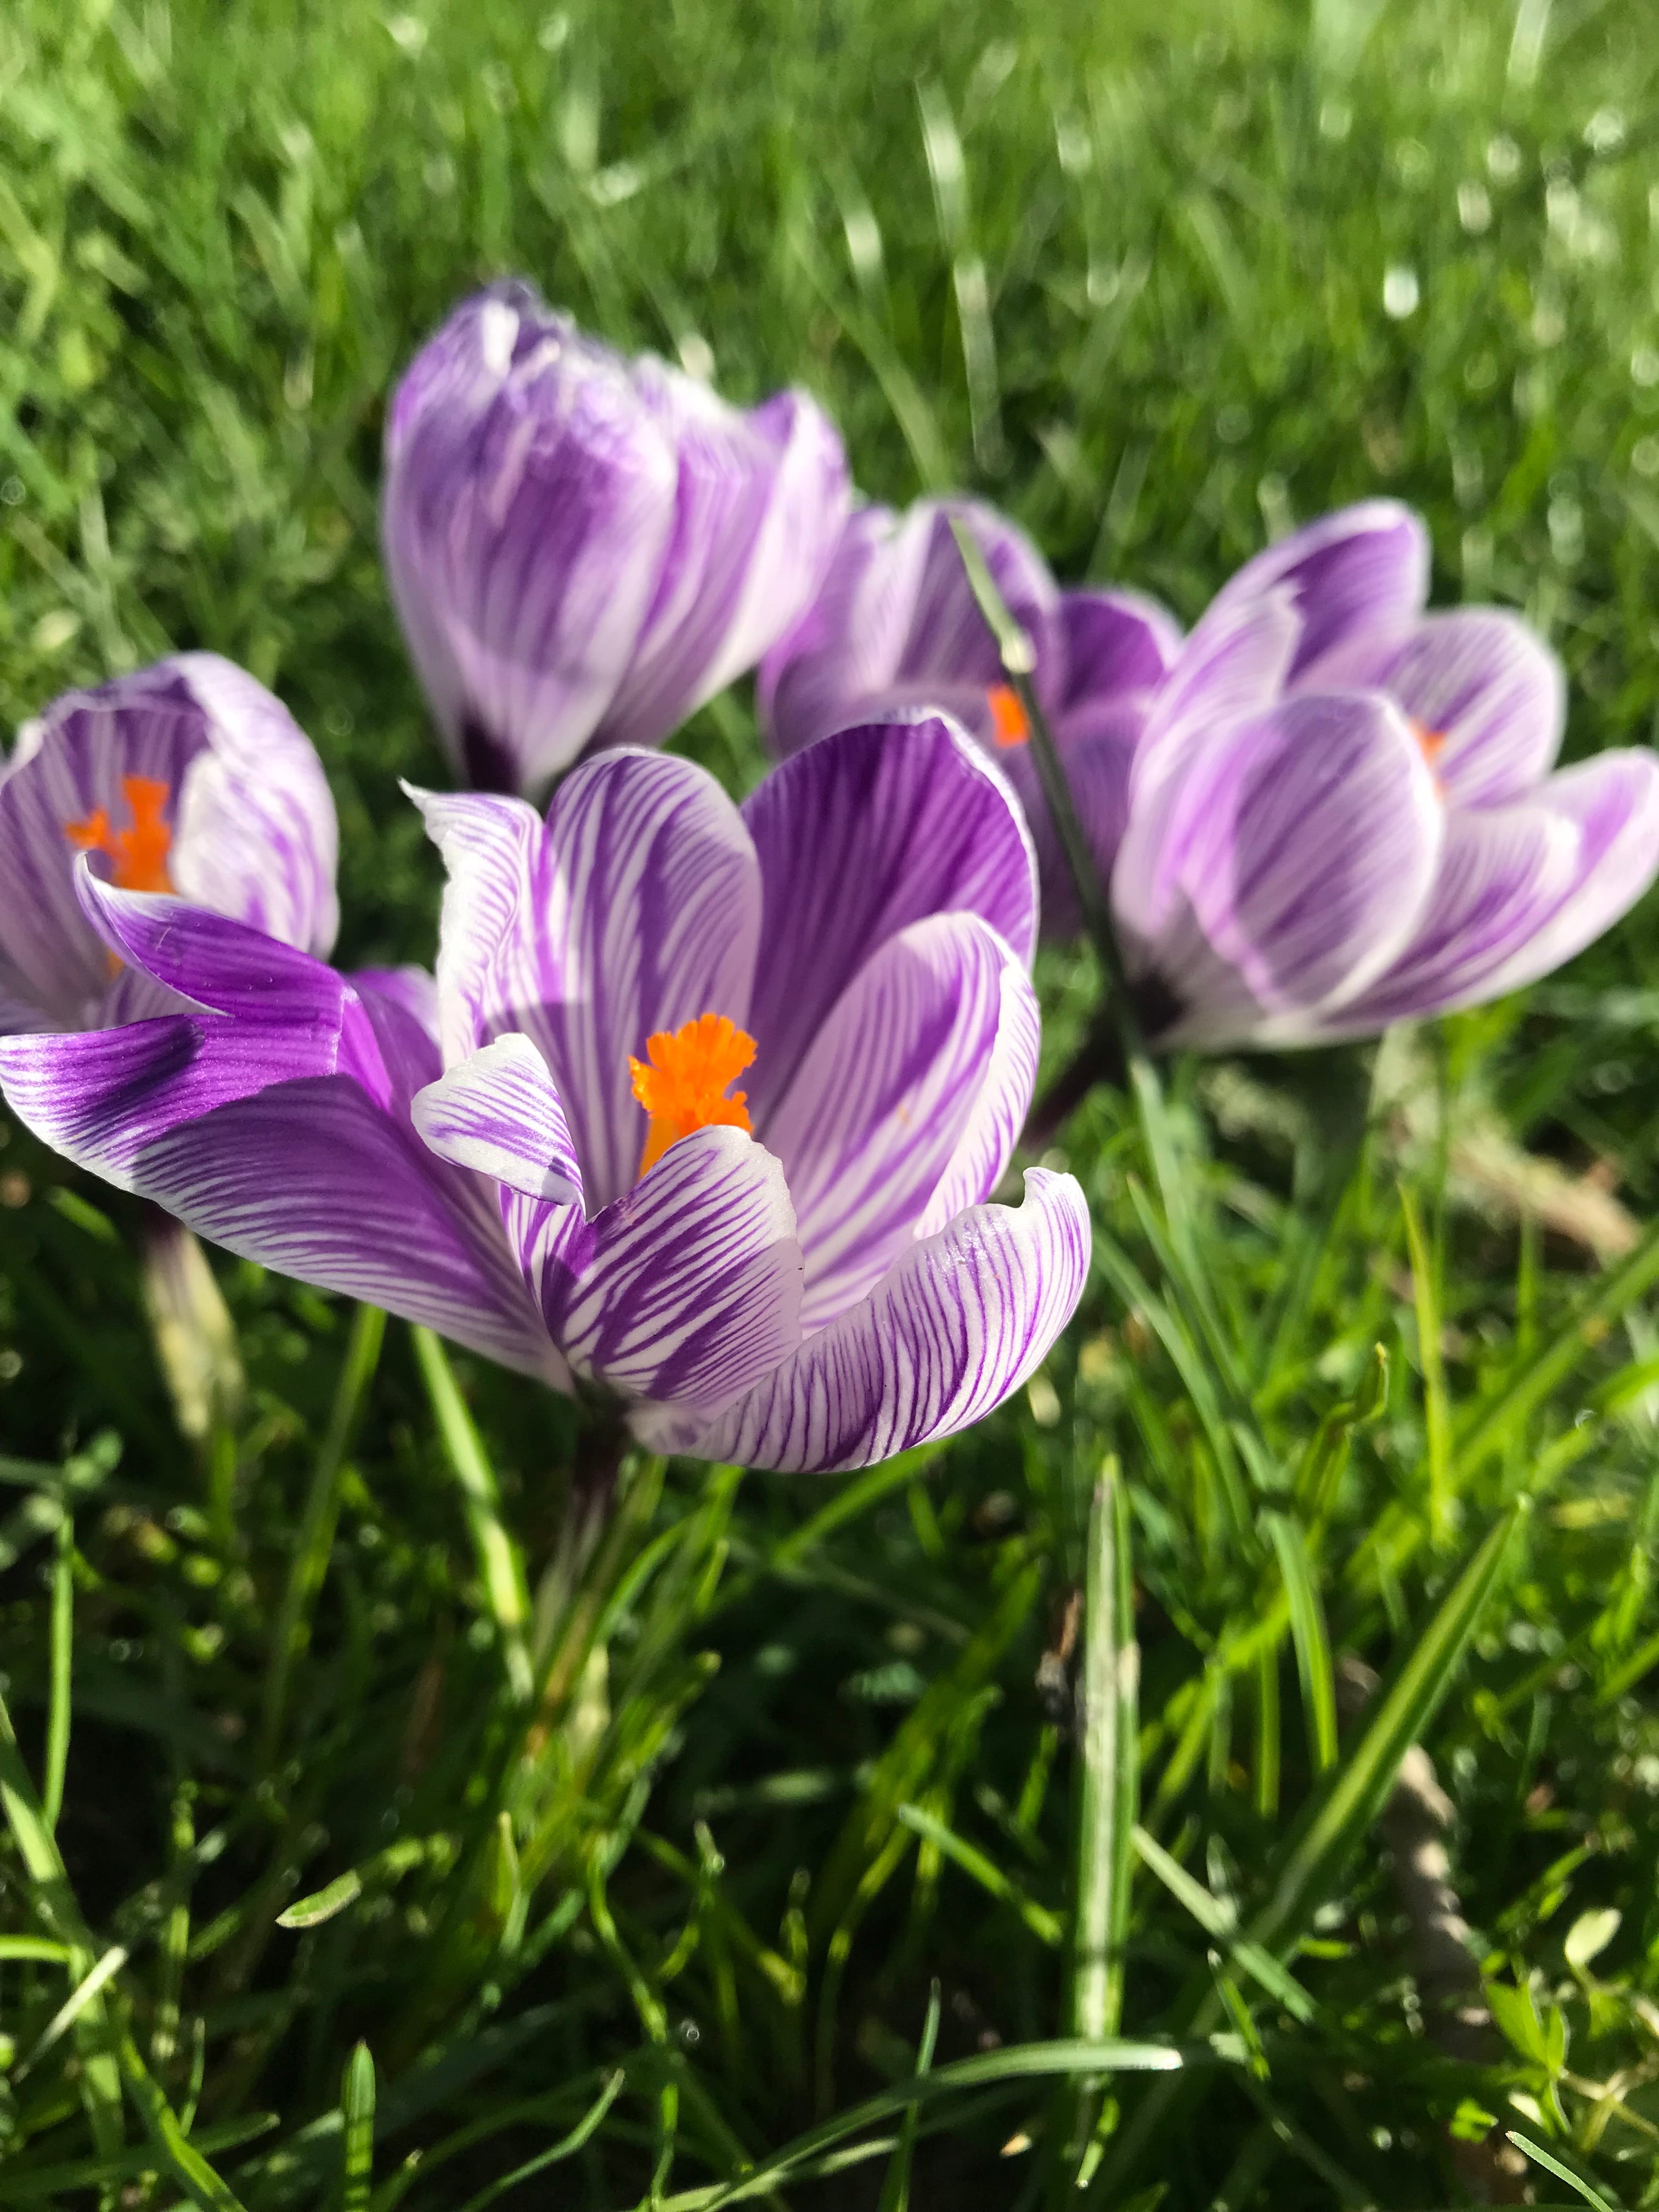 Purple and White Crocus 'King of the Stripe' Bulbs (Free UK Postage)